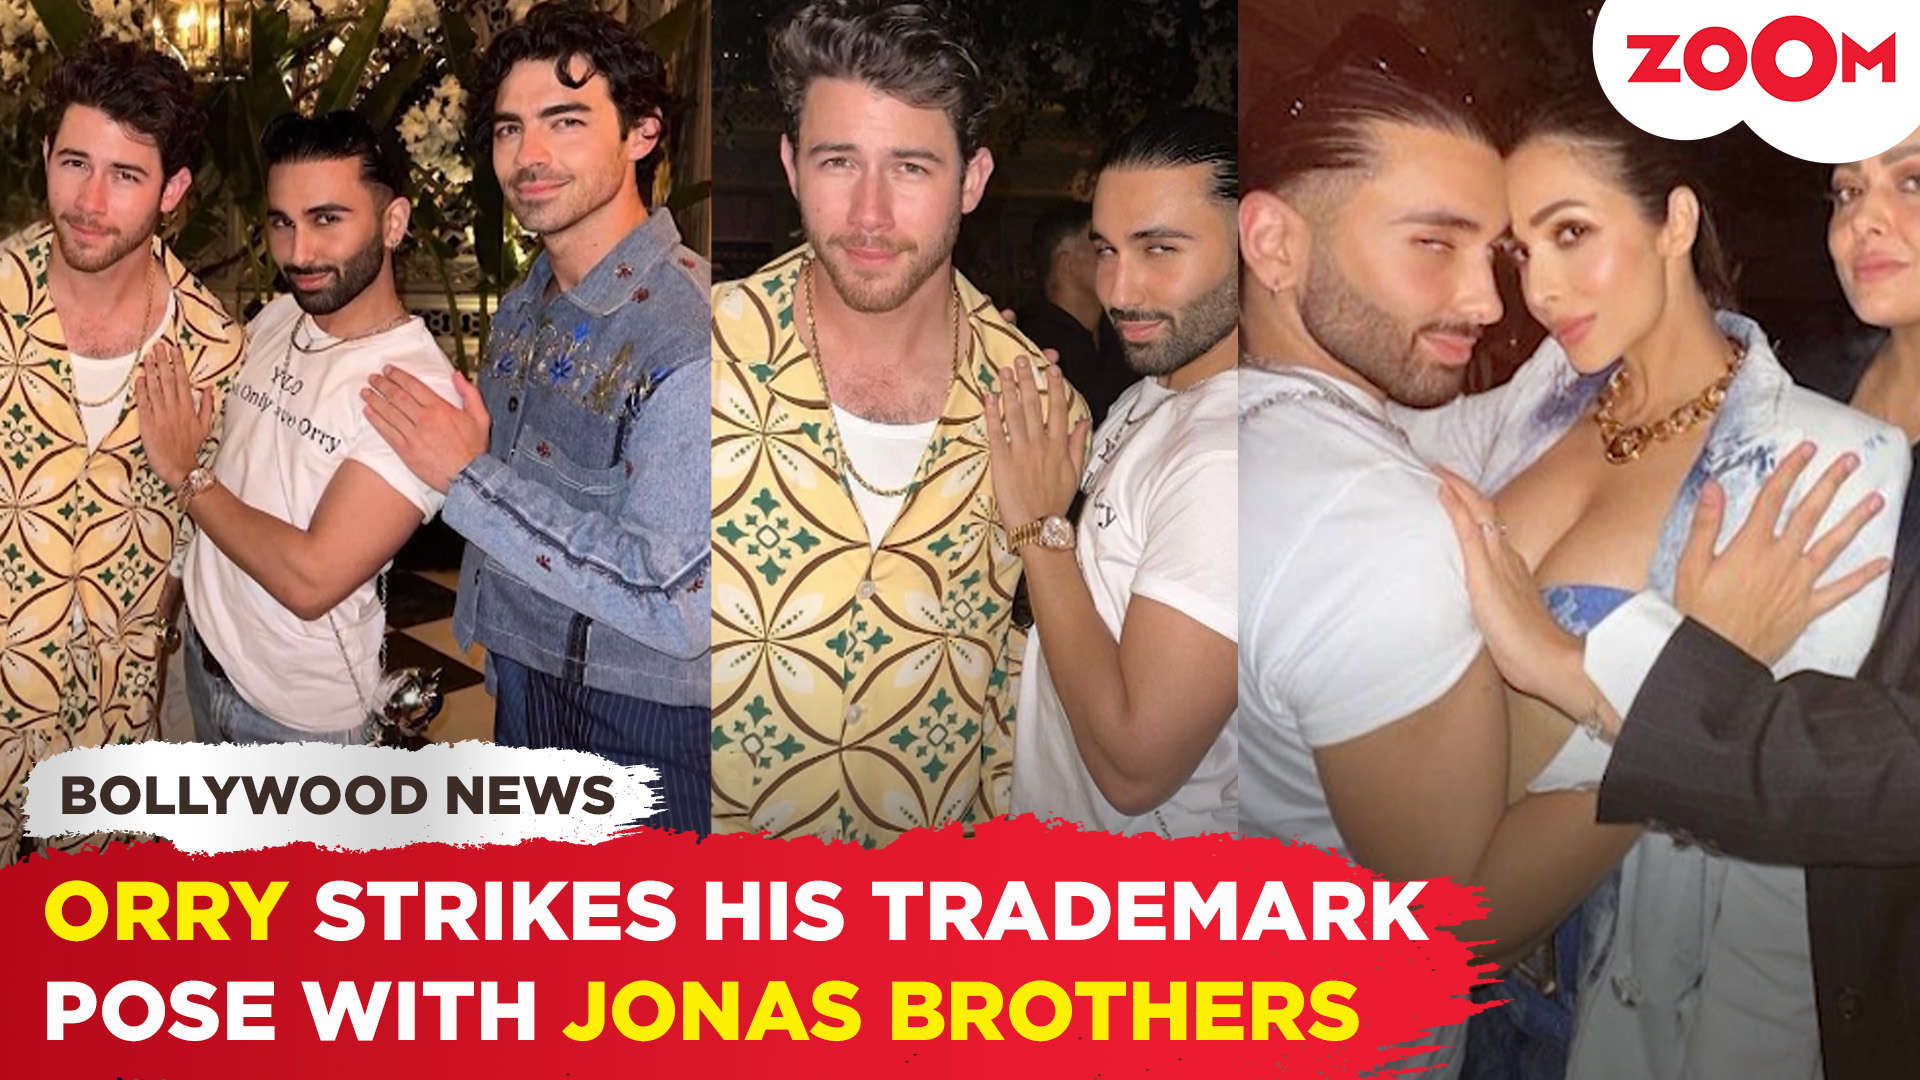 WATCH: Fan Throws Bra At Nick Jonas During NYC Concert, Singer